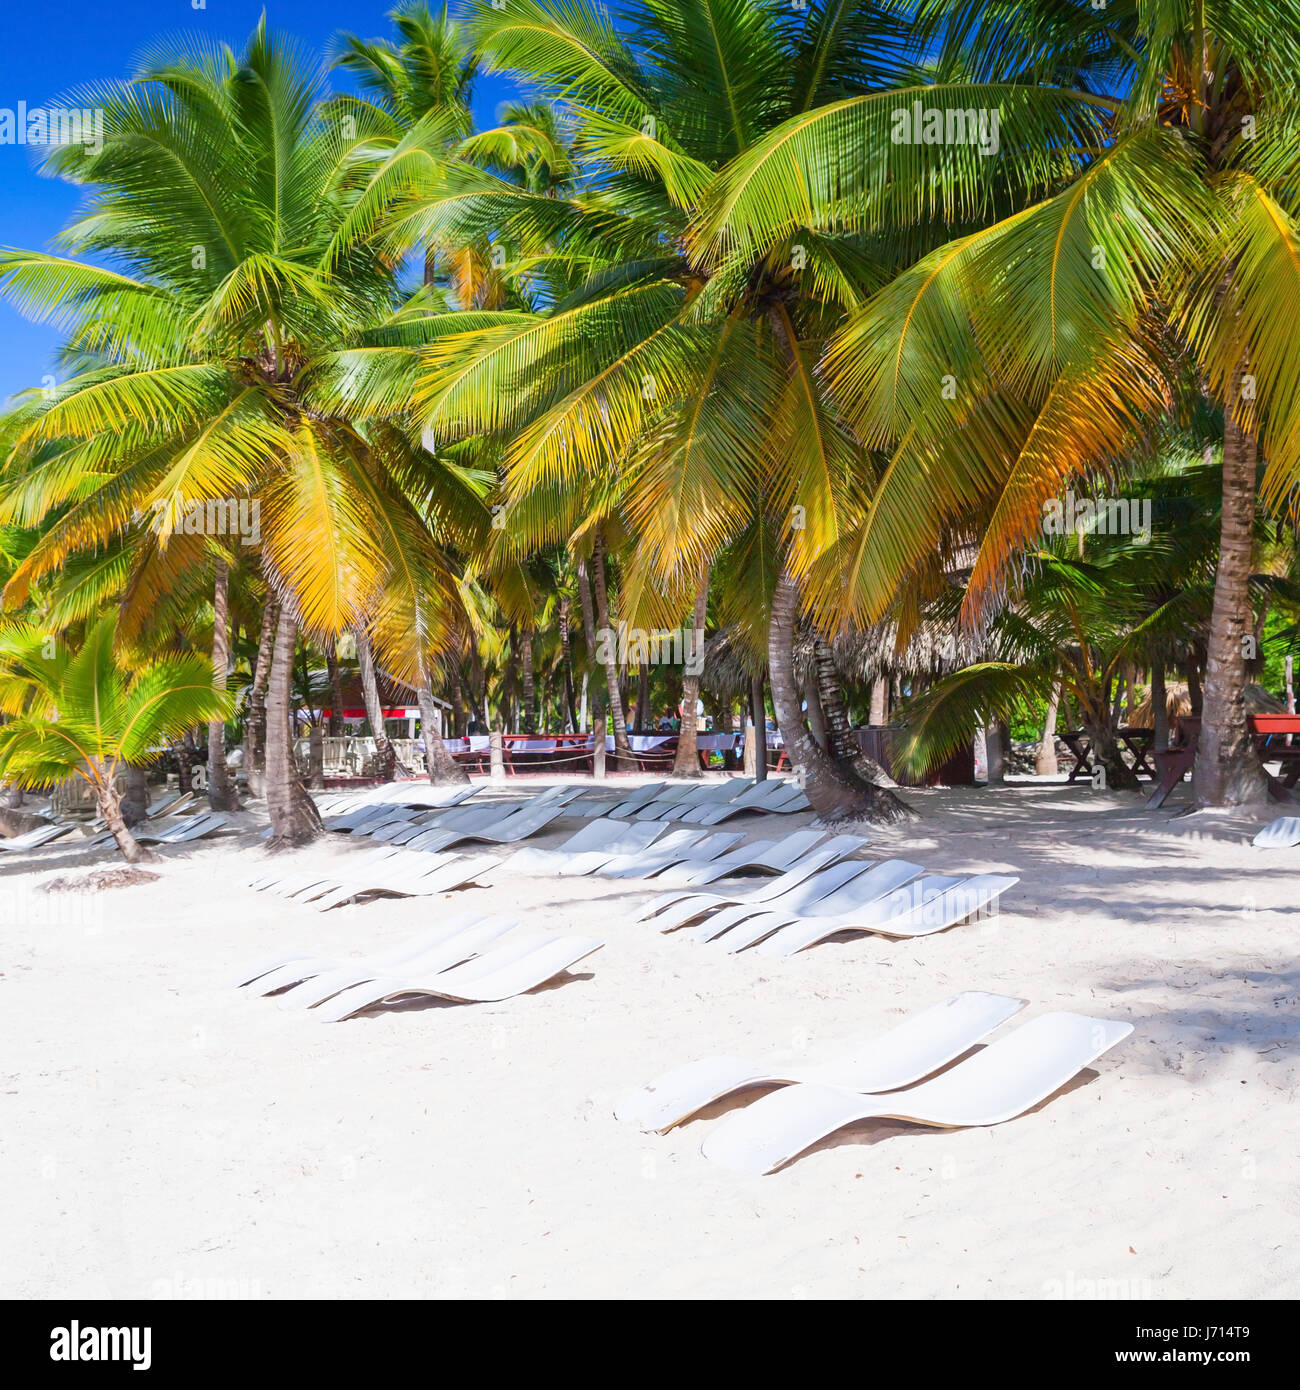 Coconut palms, empty loungers are on white sandy beach. Caribbean Sea, Dominican republic, Saona island coast, touristic resort Stock Photo